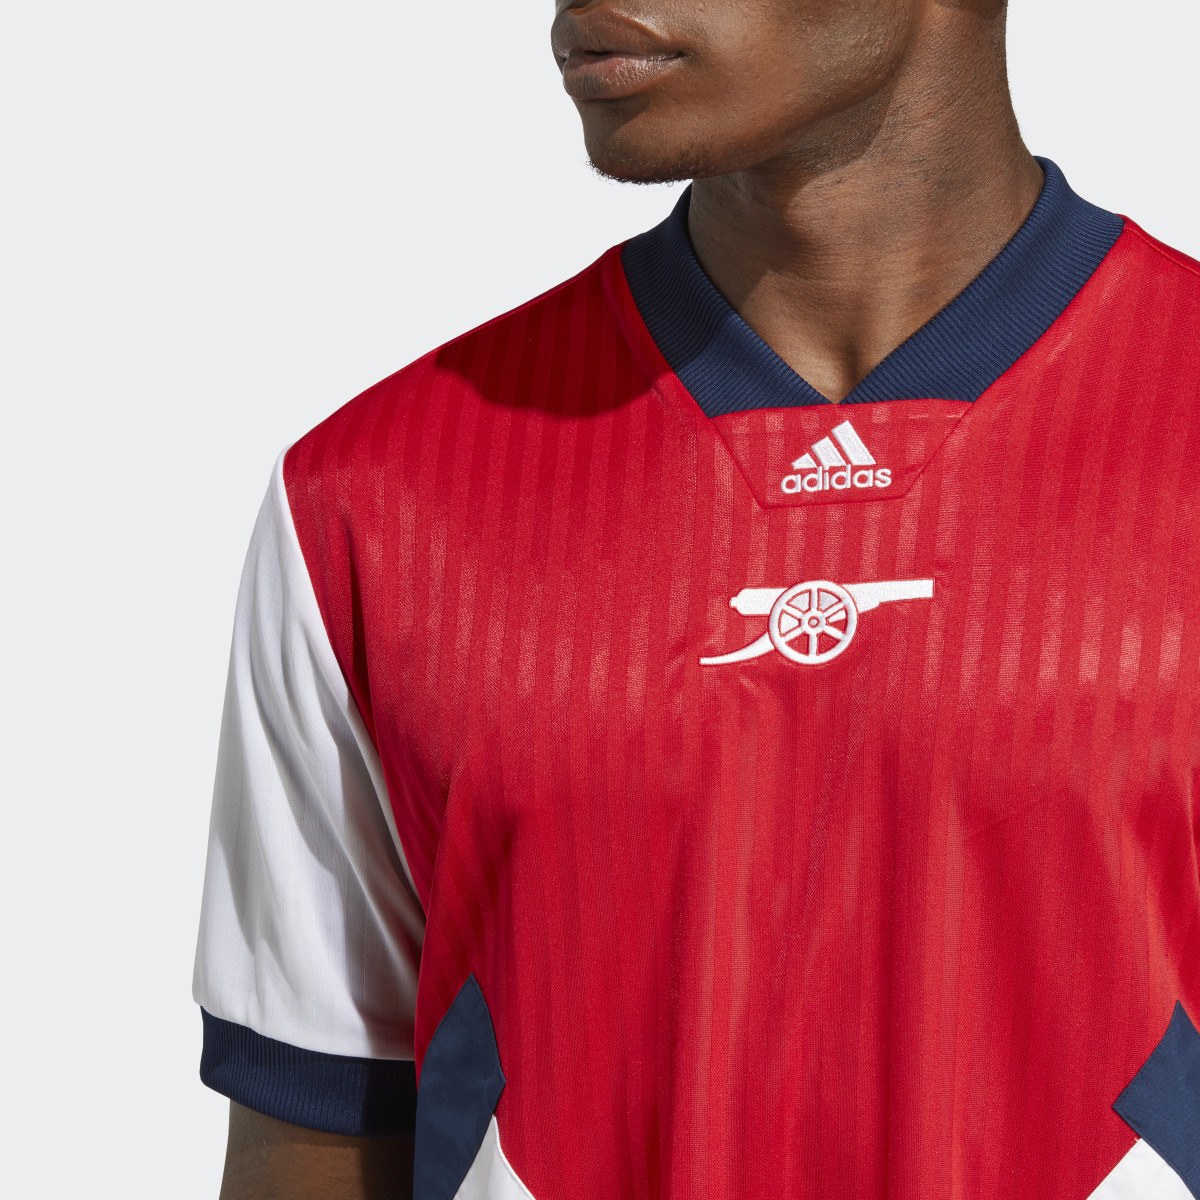 Adidas Arsenal Icon Jersey. 8